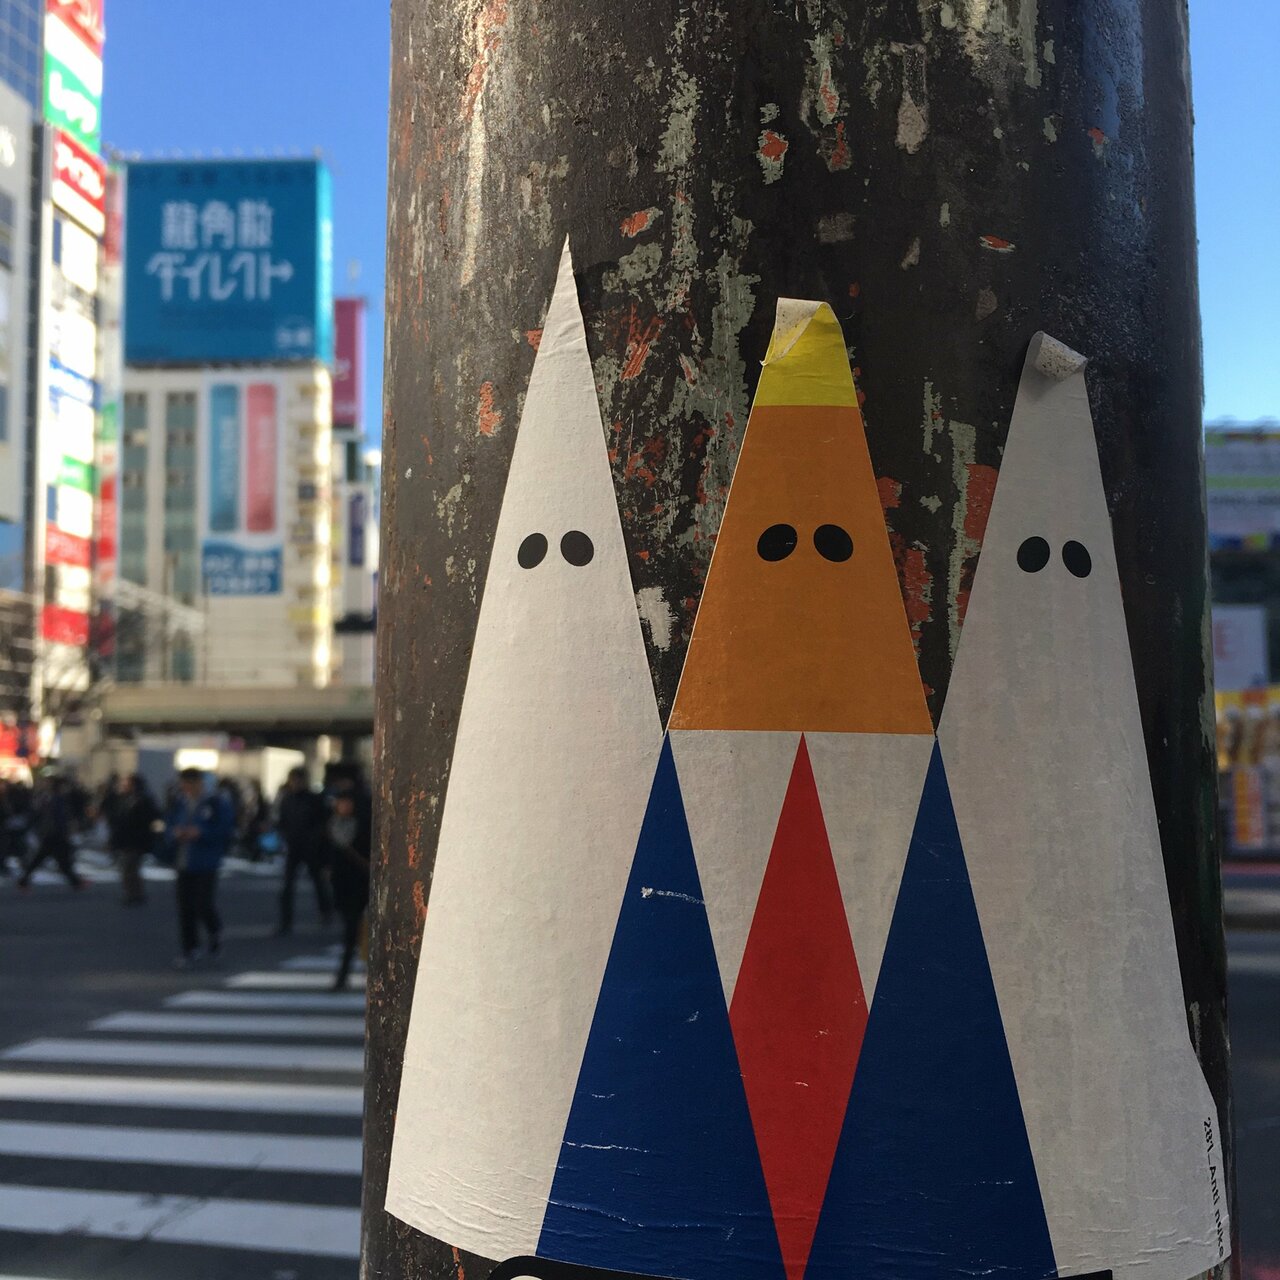 #Wheatpaste #Trump #PoliticalStreetart in #Japan by an artist not known to me. #TheResistance #Streetart https://t.co/zYo3uHHVvK